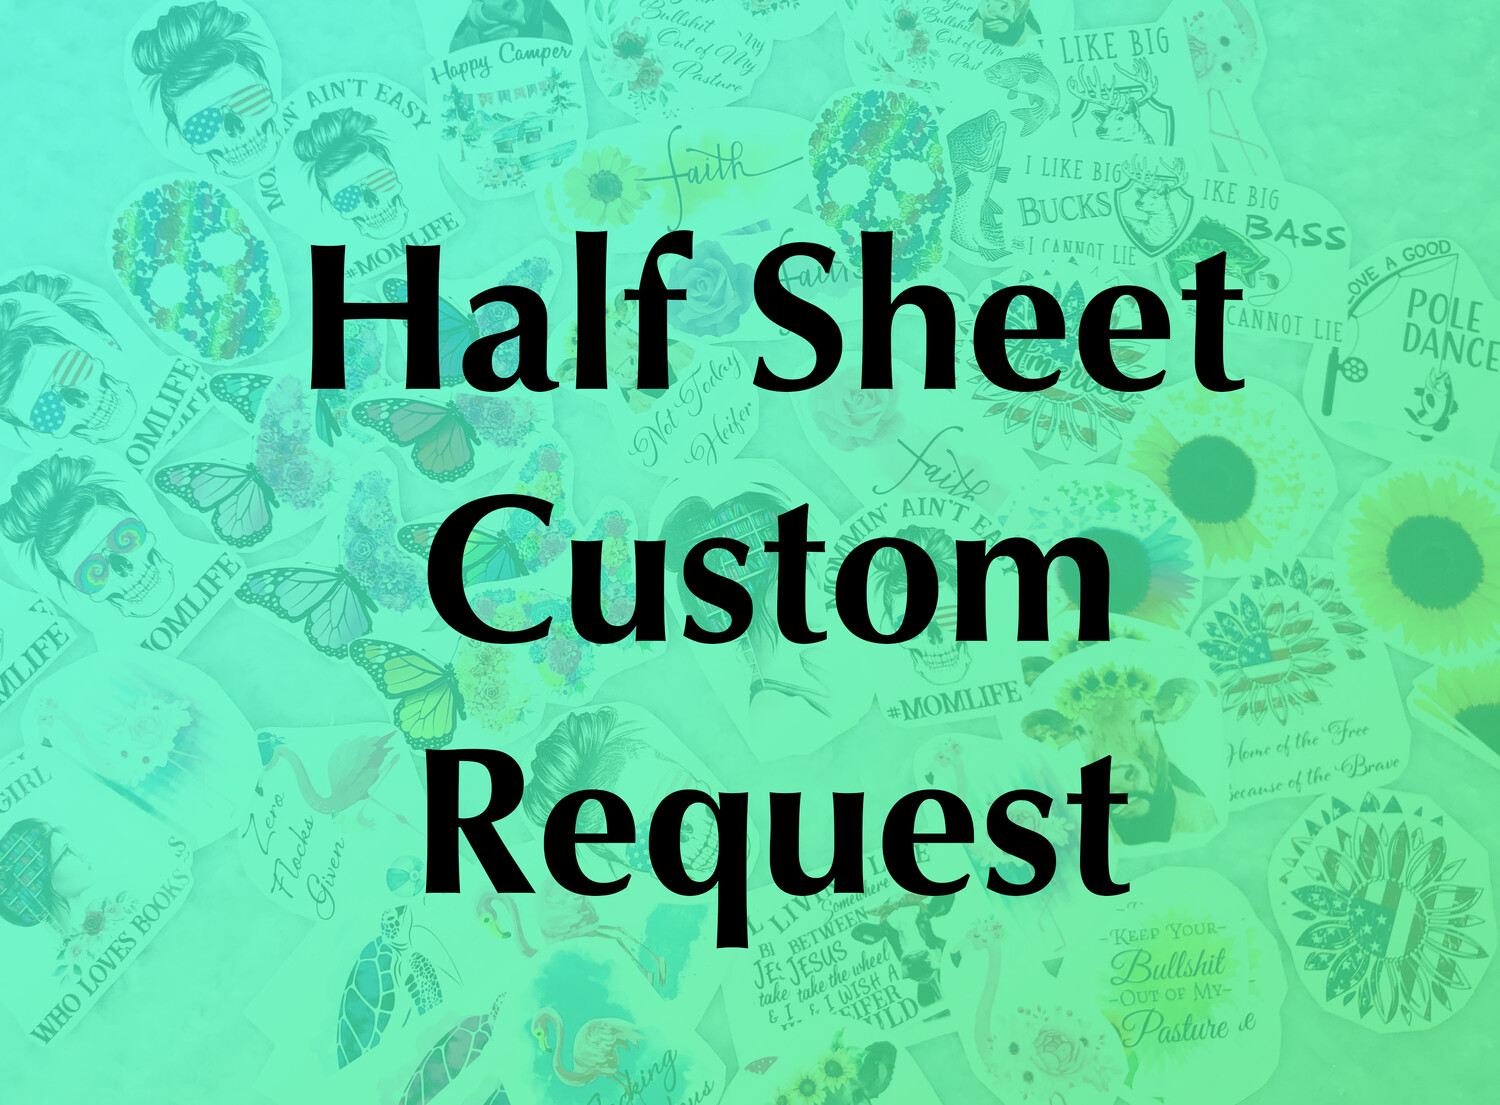 Custom - Half Sheet, Your Image (AS IS - No Edits), Waterslide